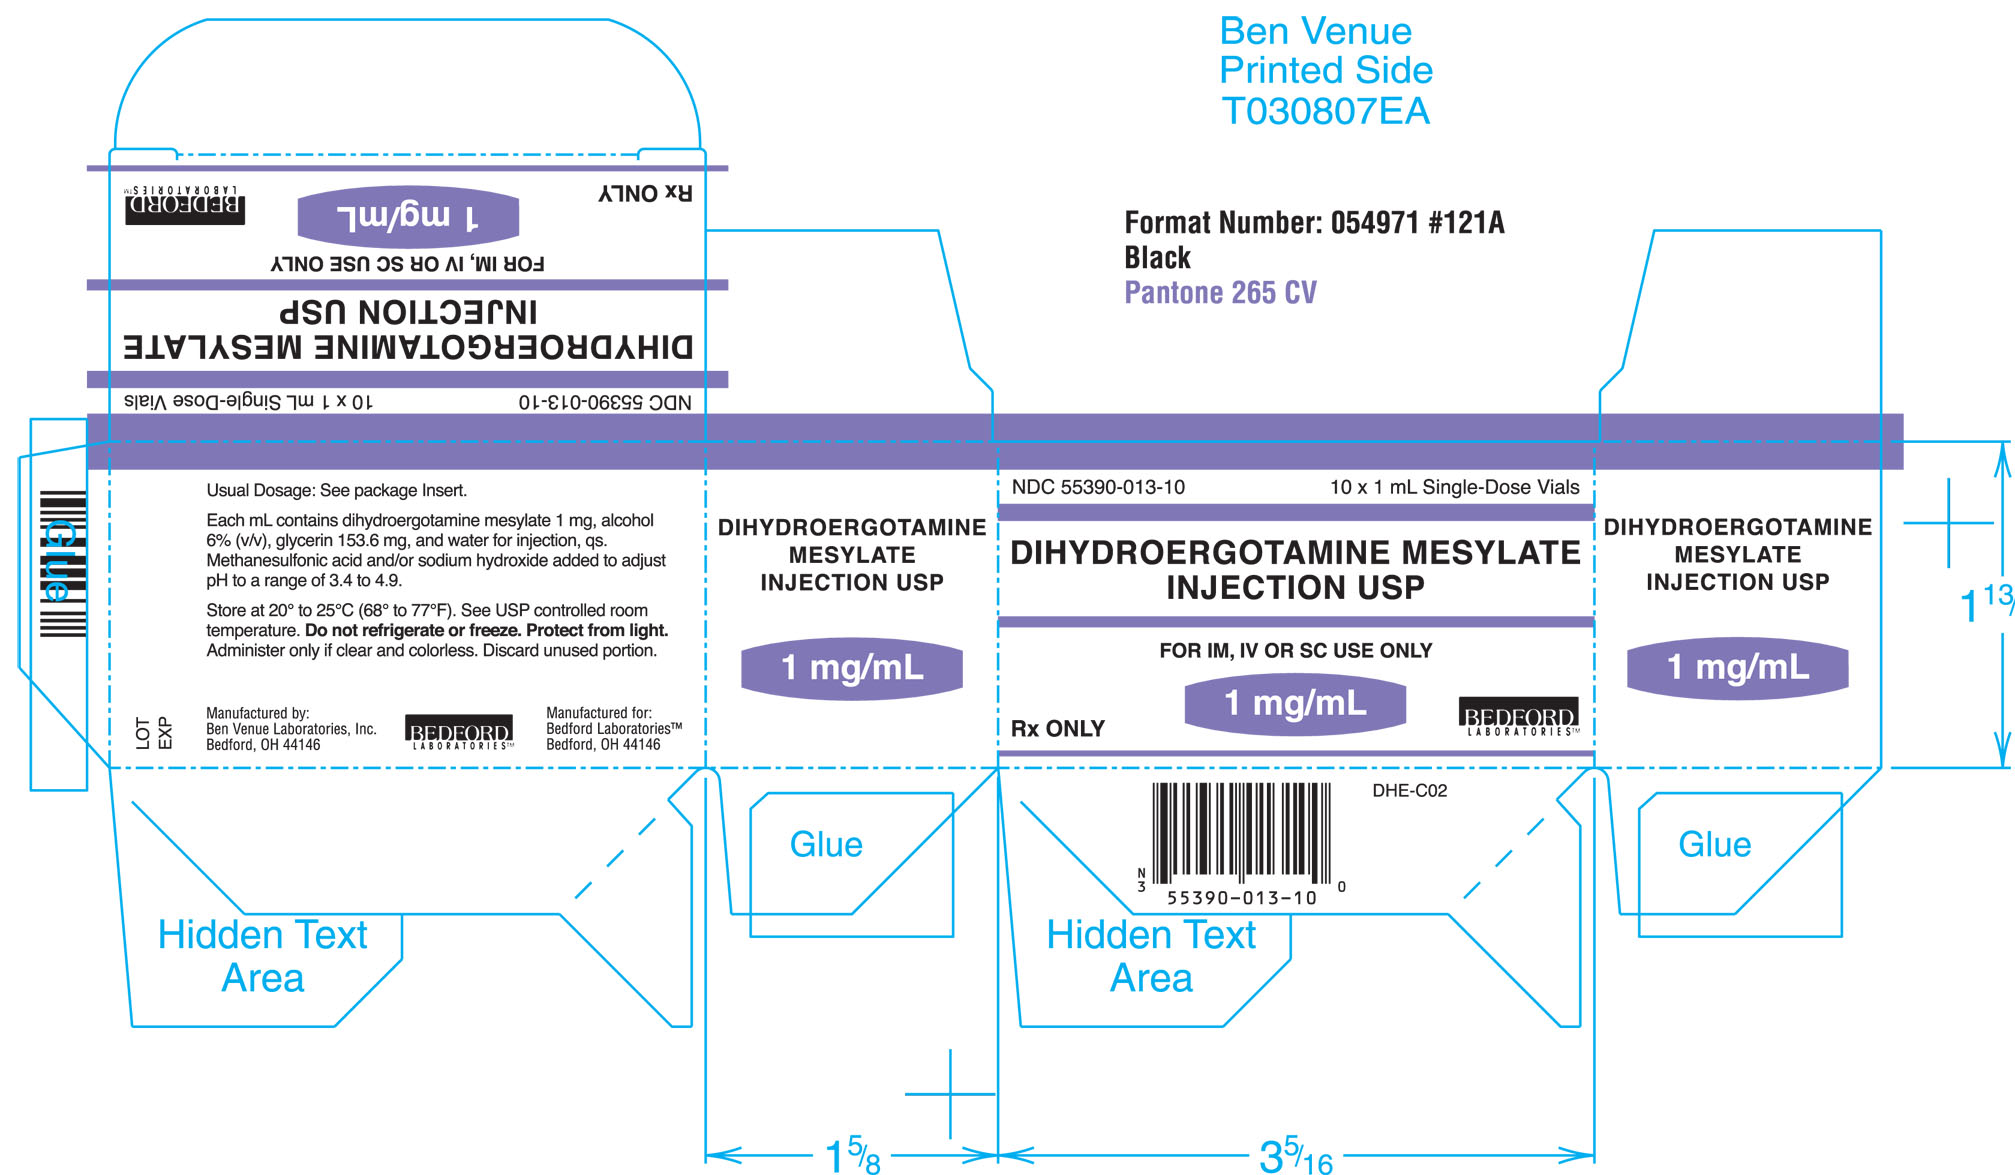 Shelf carton for Dihydroergotamine Mesylate Injection USP 1 mg per mL